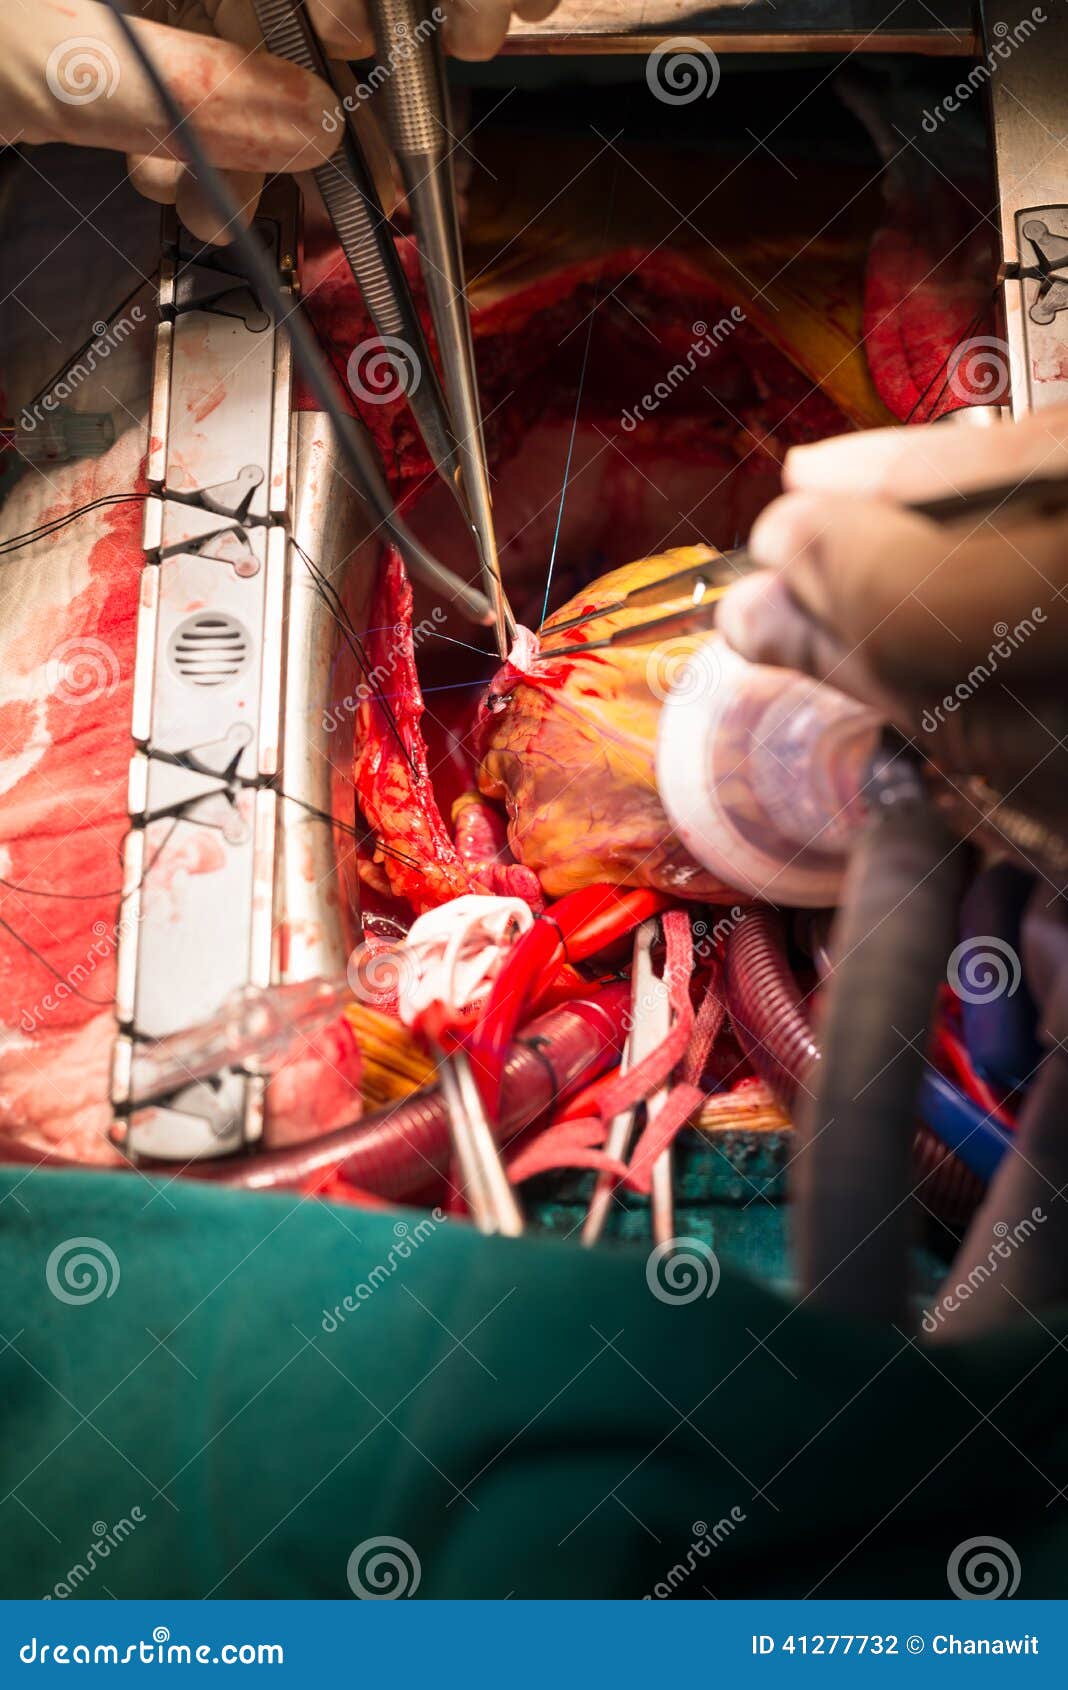 coronary artery bypass grafting obtuse marginal artery